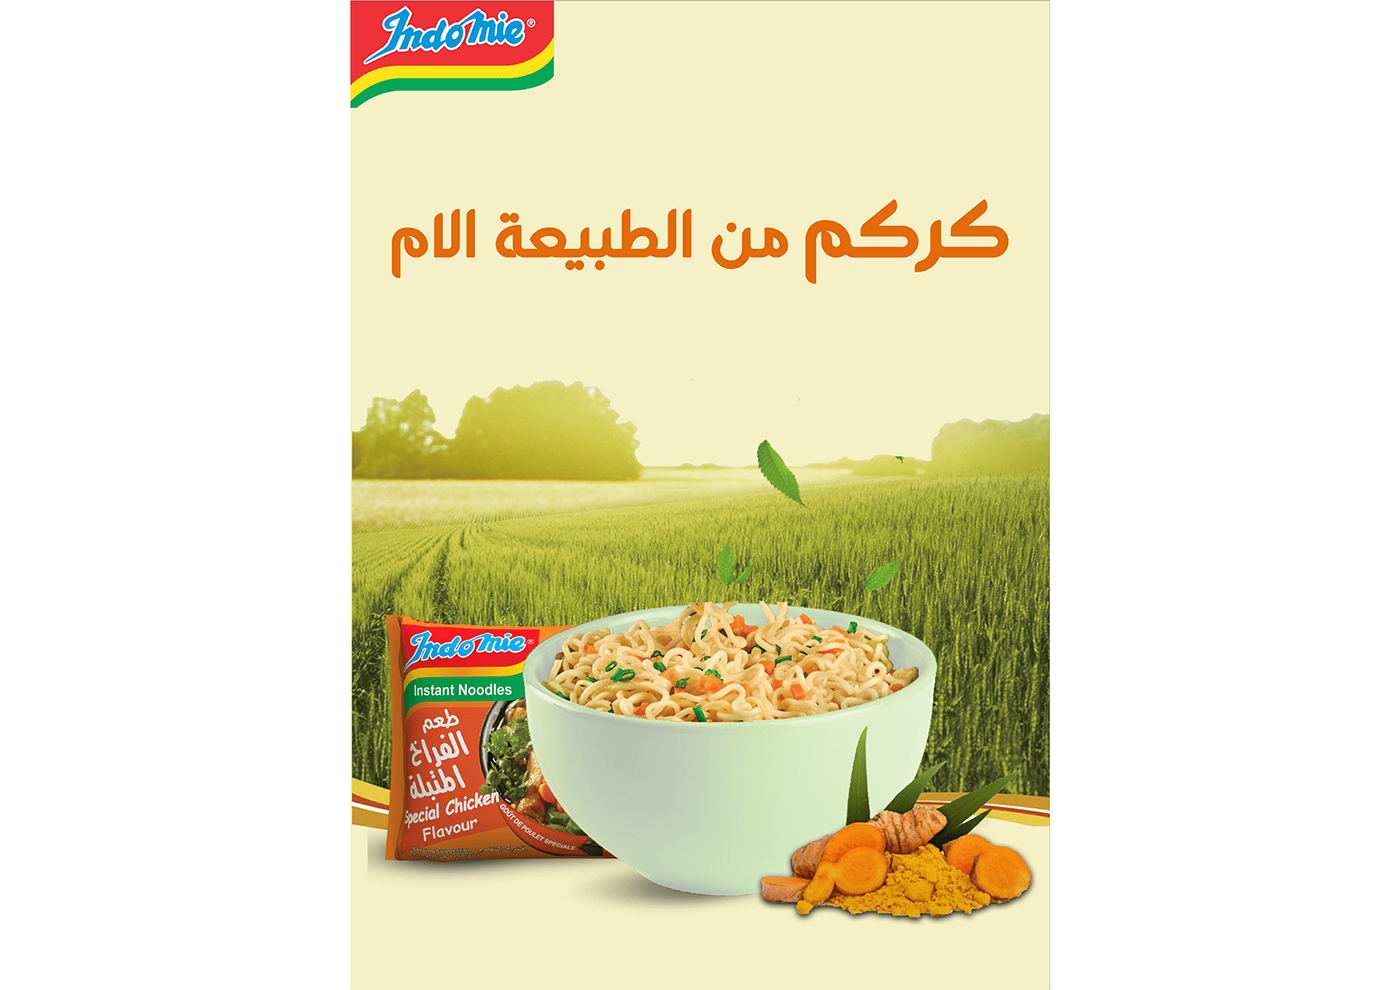 ads campaign Indomie indomie egypt Indomie Noodles noodles Social media post